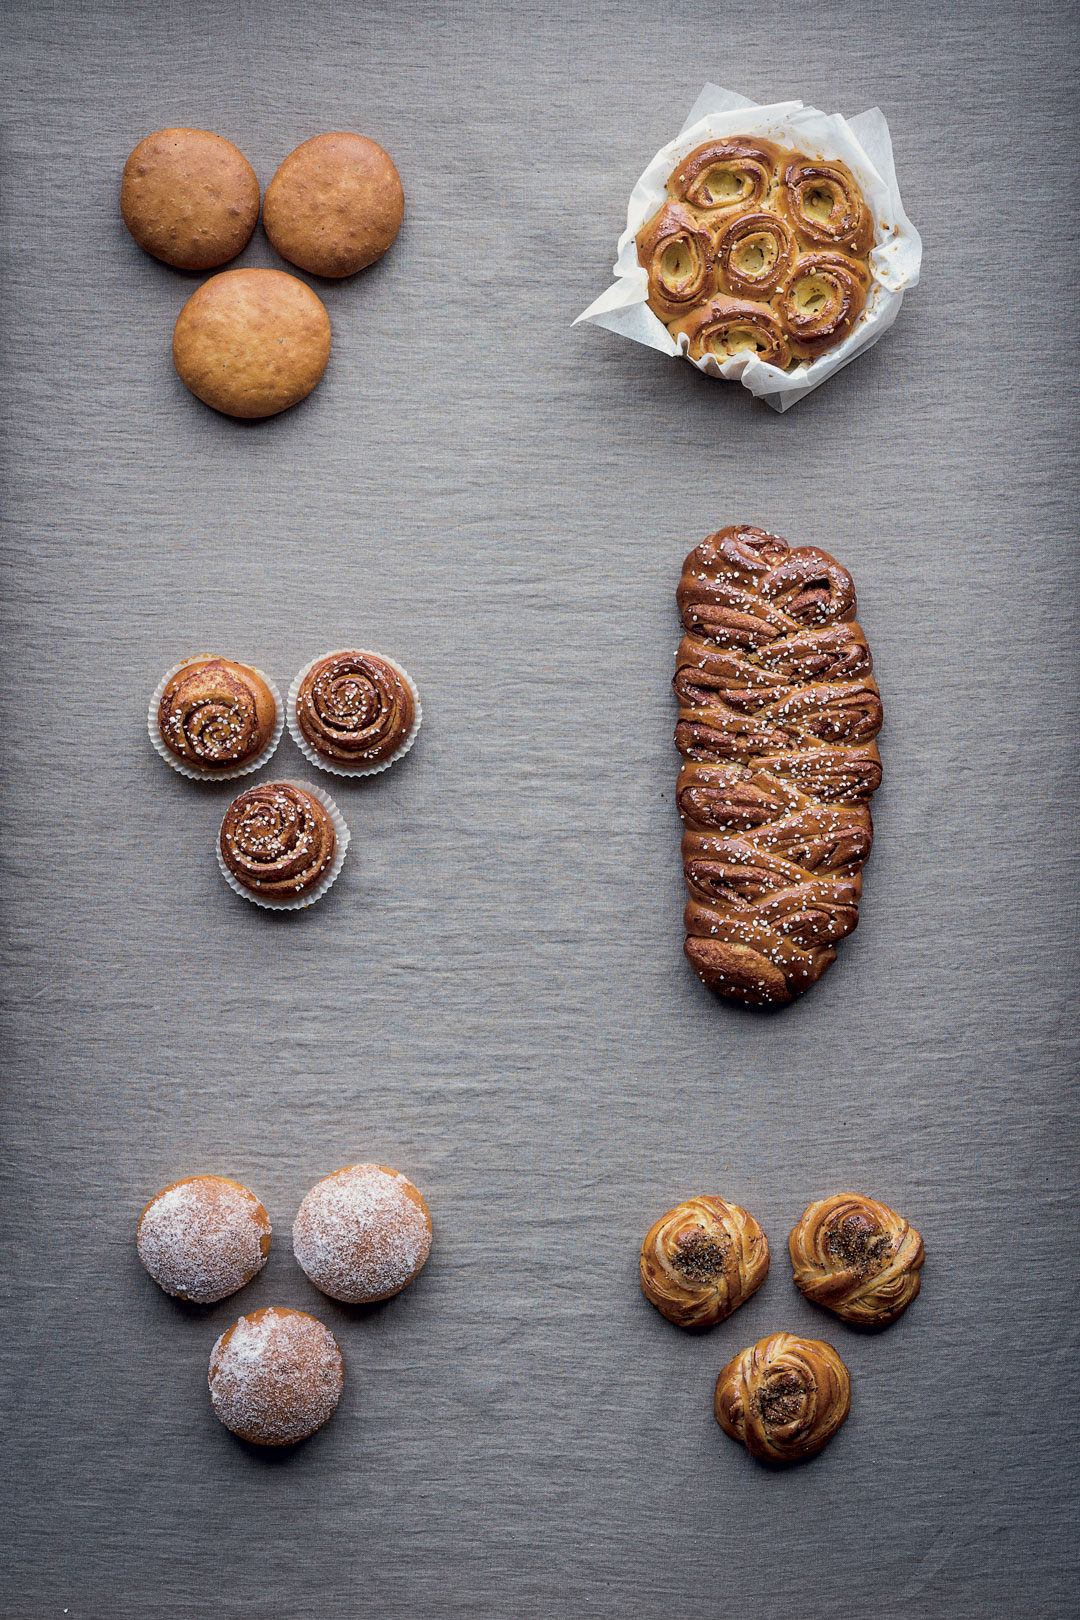 Clockwise from top left: Plain Sweet Wheat Buns; Cinnamon Bun Cake; Cinnamon Bun Braid; Cardamom Bun Knots; Vanilla Cream Buns; and Cinnamon Buns